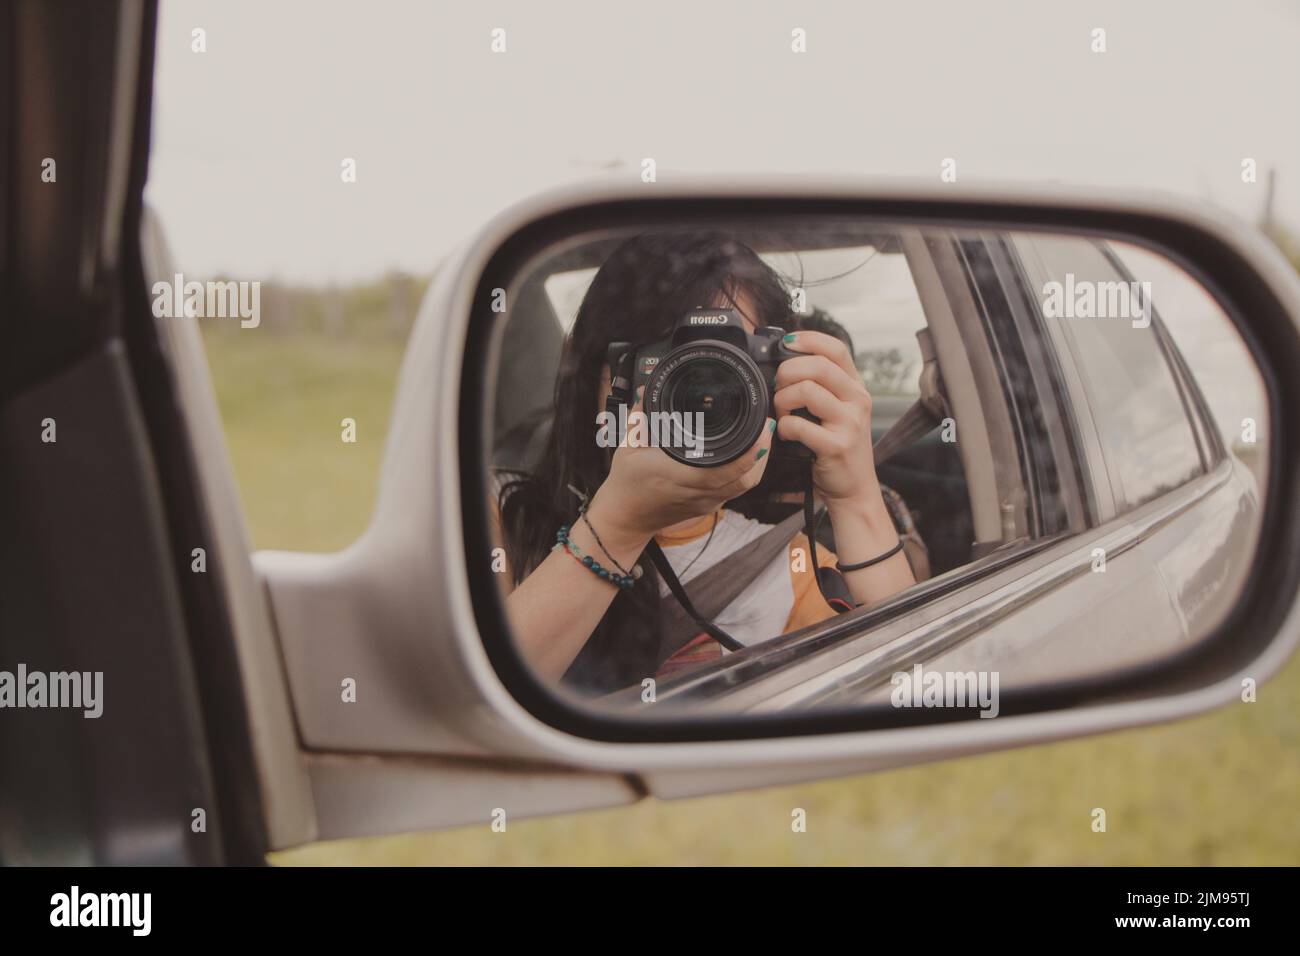 photographer in car mirror Stock Photo